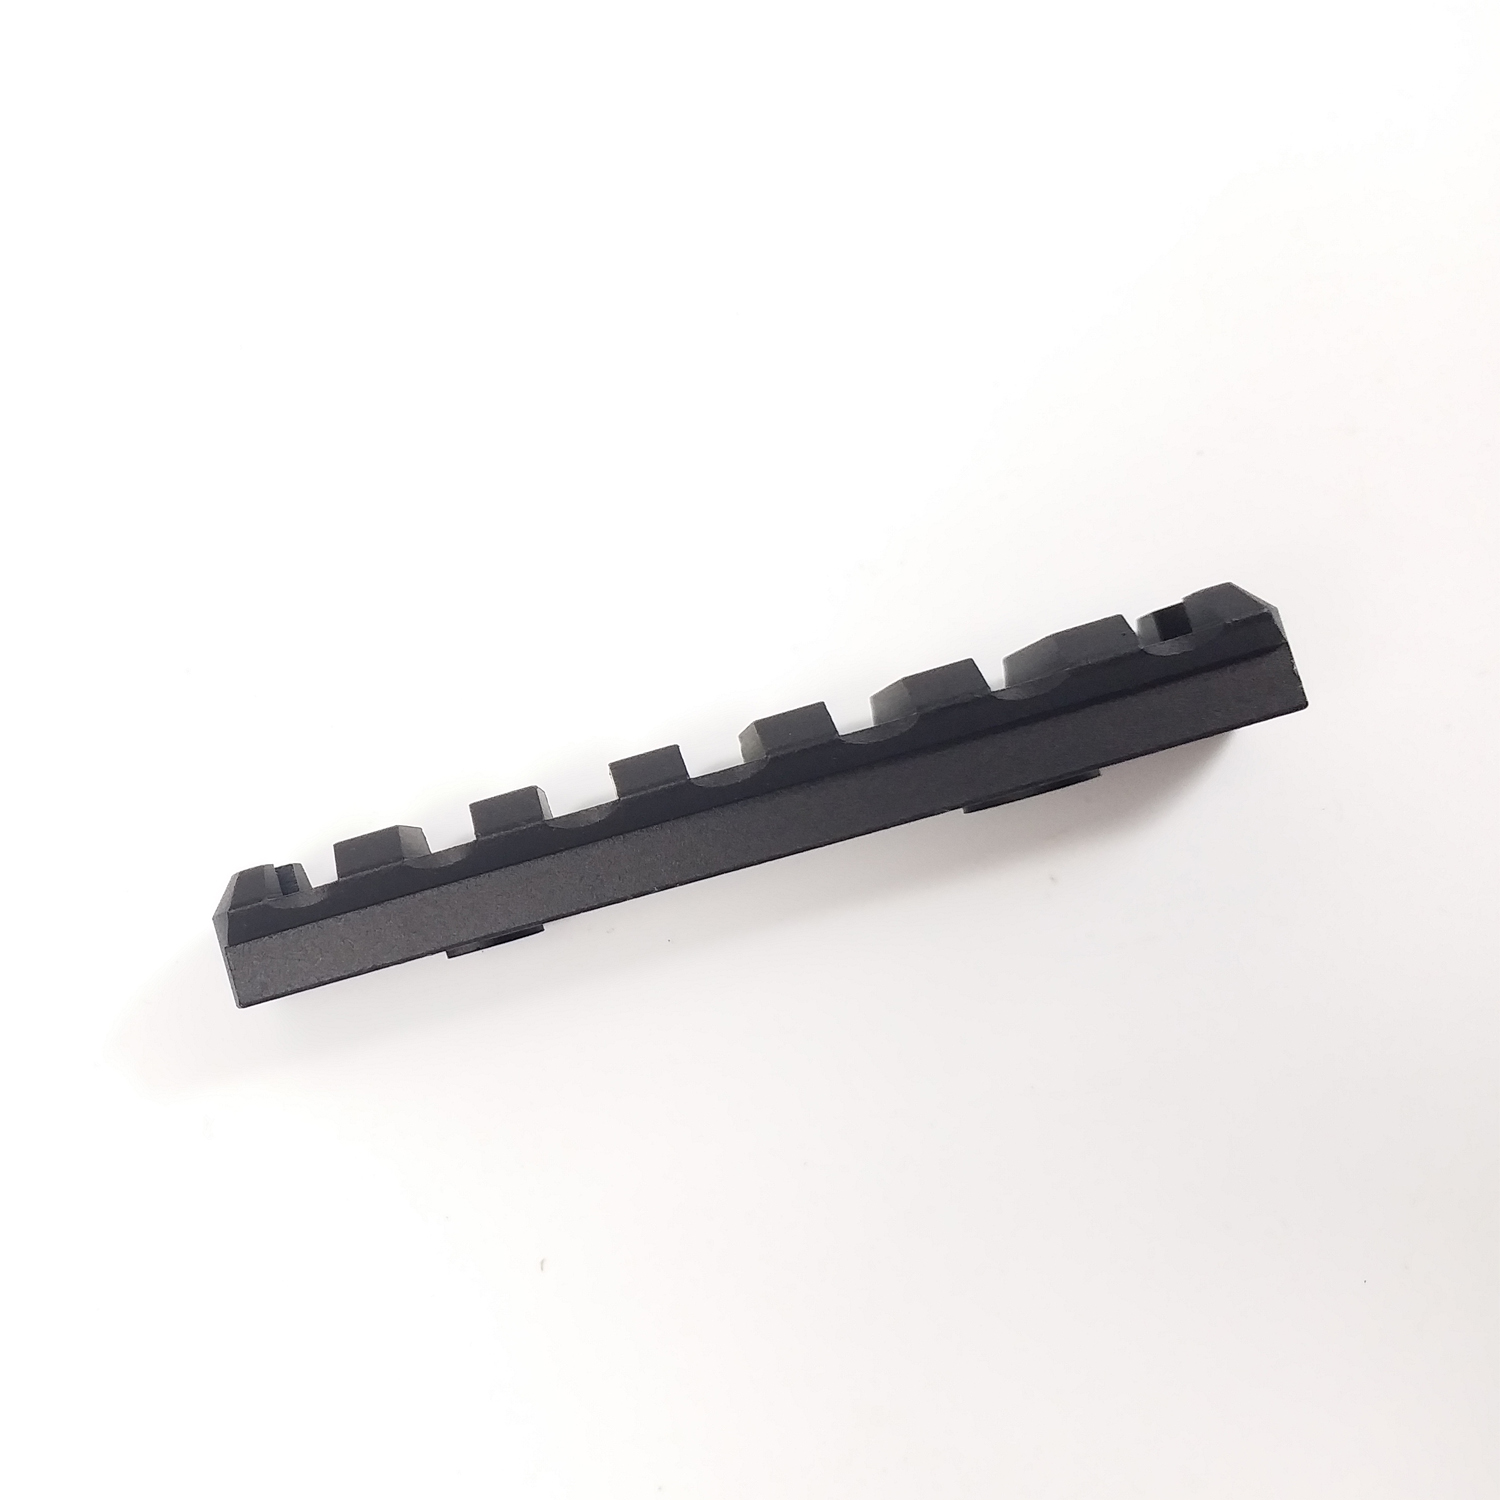 5,7,9,11,13 slot CNC Aluminum Picatinny Rail Section For Keymod Handguards Balck color RSK-xB